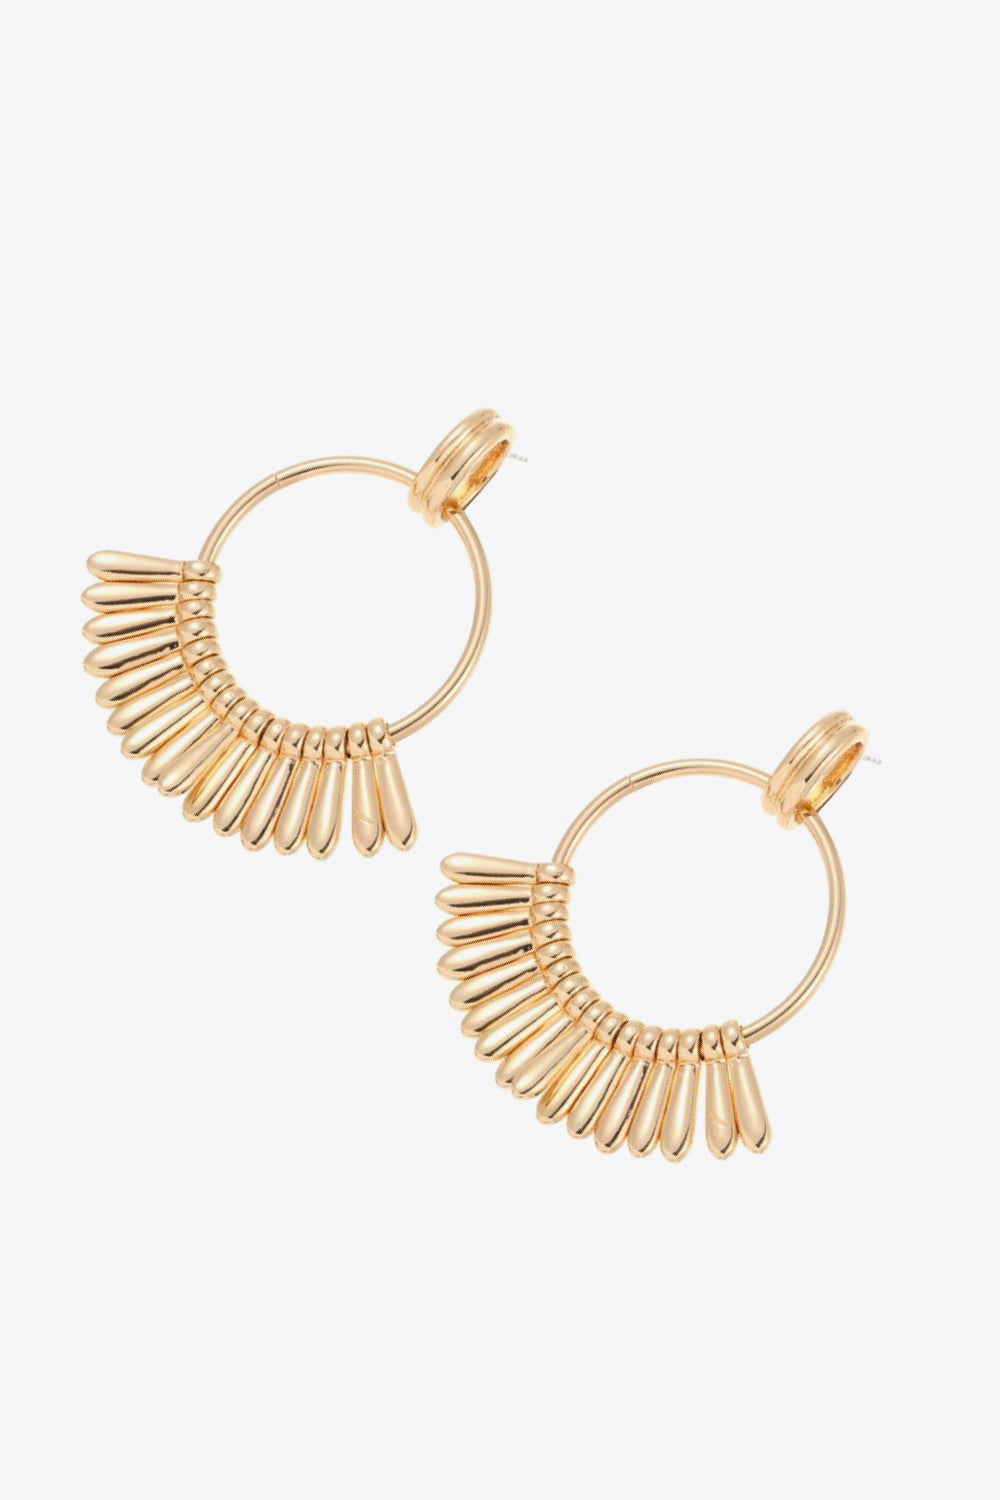 5-Pair Wholesale 18K Gold-Plated Zinc alloy Drop Earrings